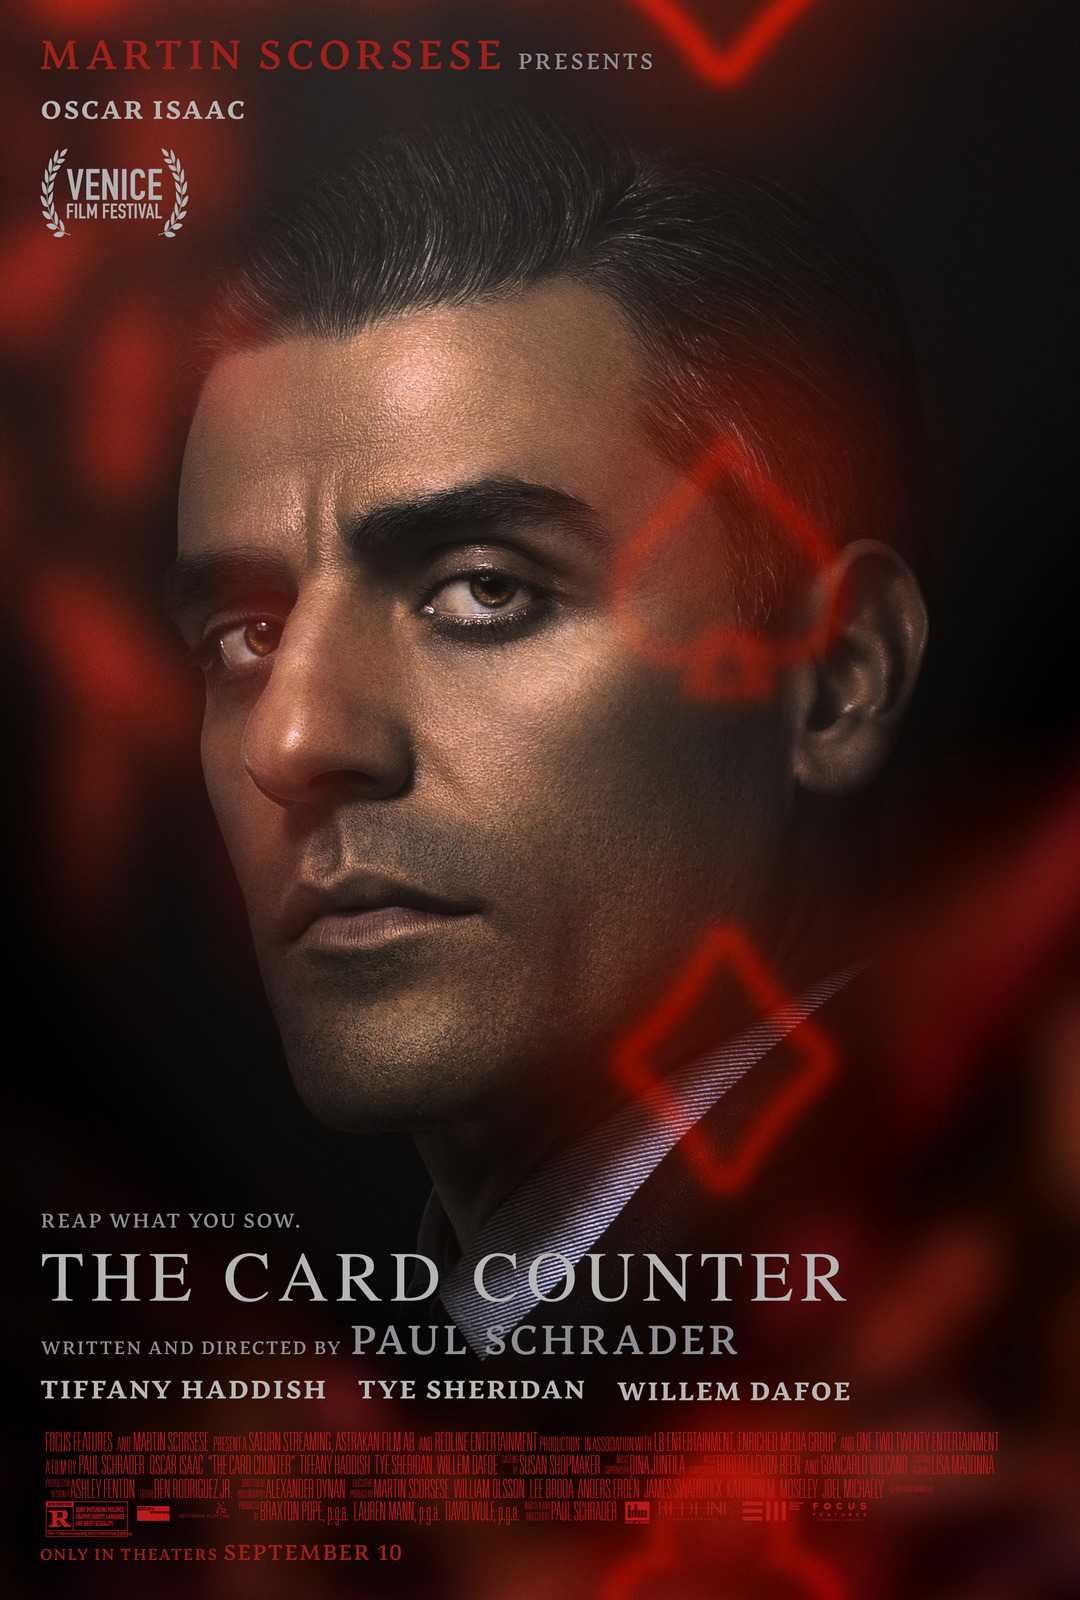 Stiahni si Filmy CZ/SK dabing Svindlir / The Card Counter (2021)(CZ)[1080p] = CSFD 58%